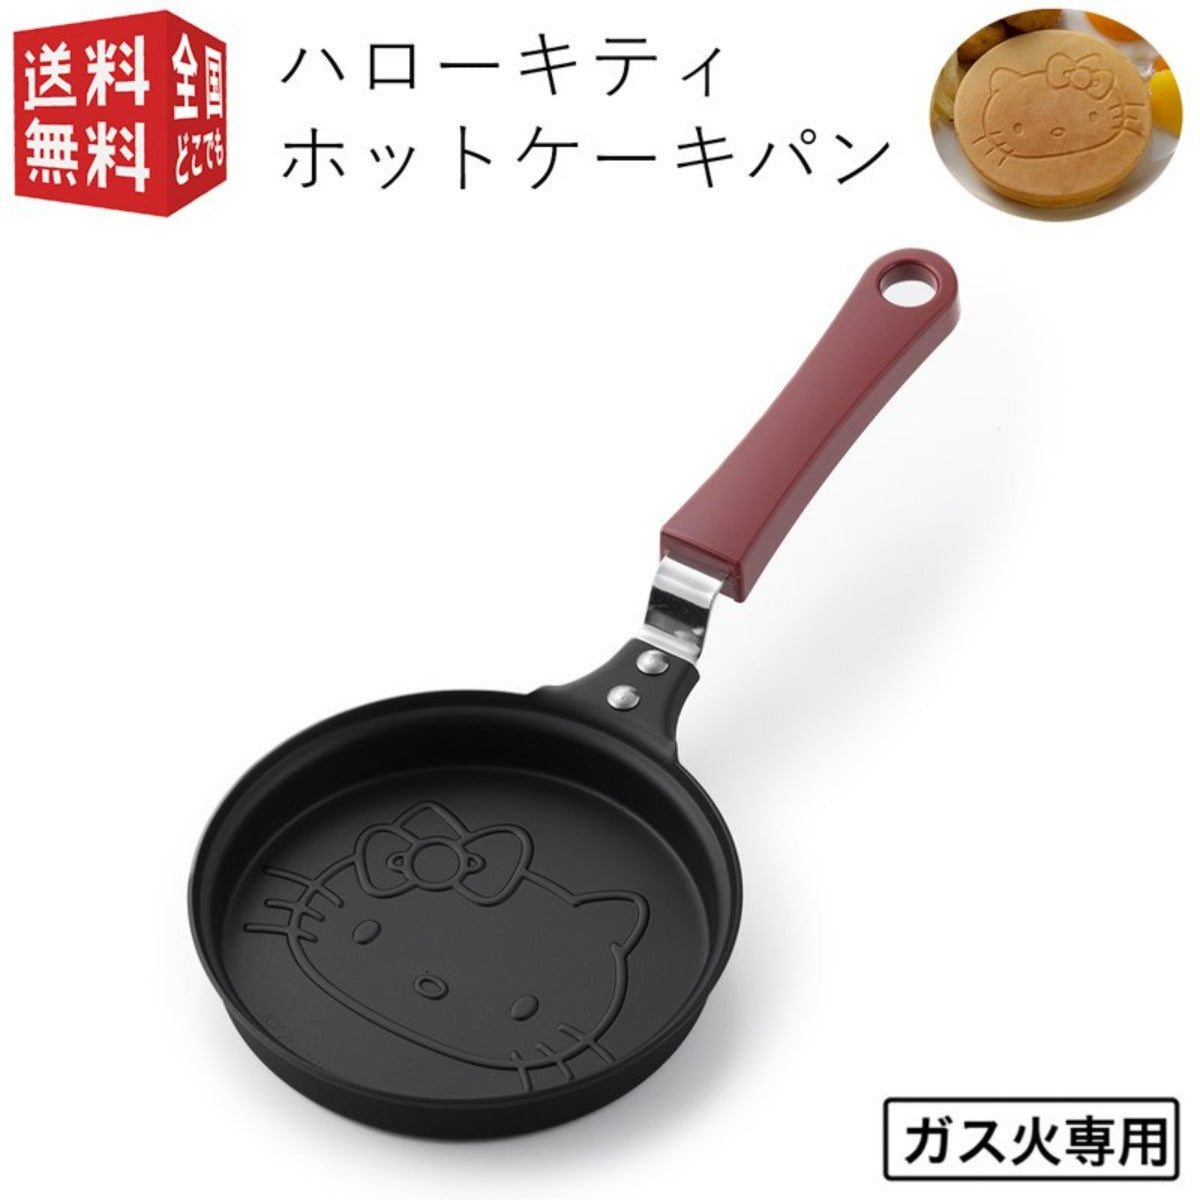 Hotcake Pan - Sanrio Hello Kitty 12cm